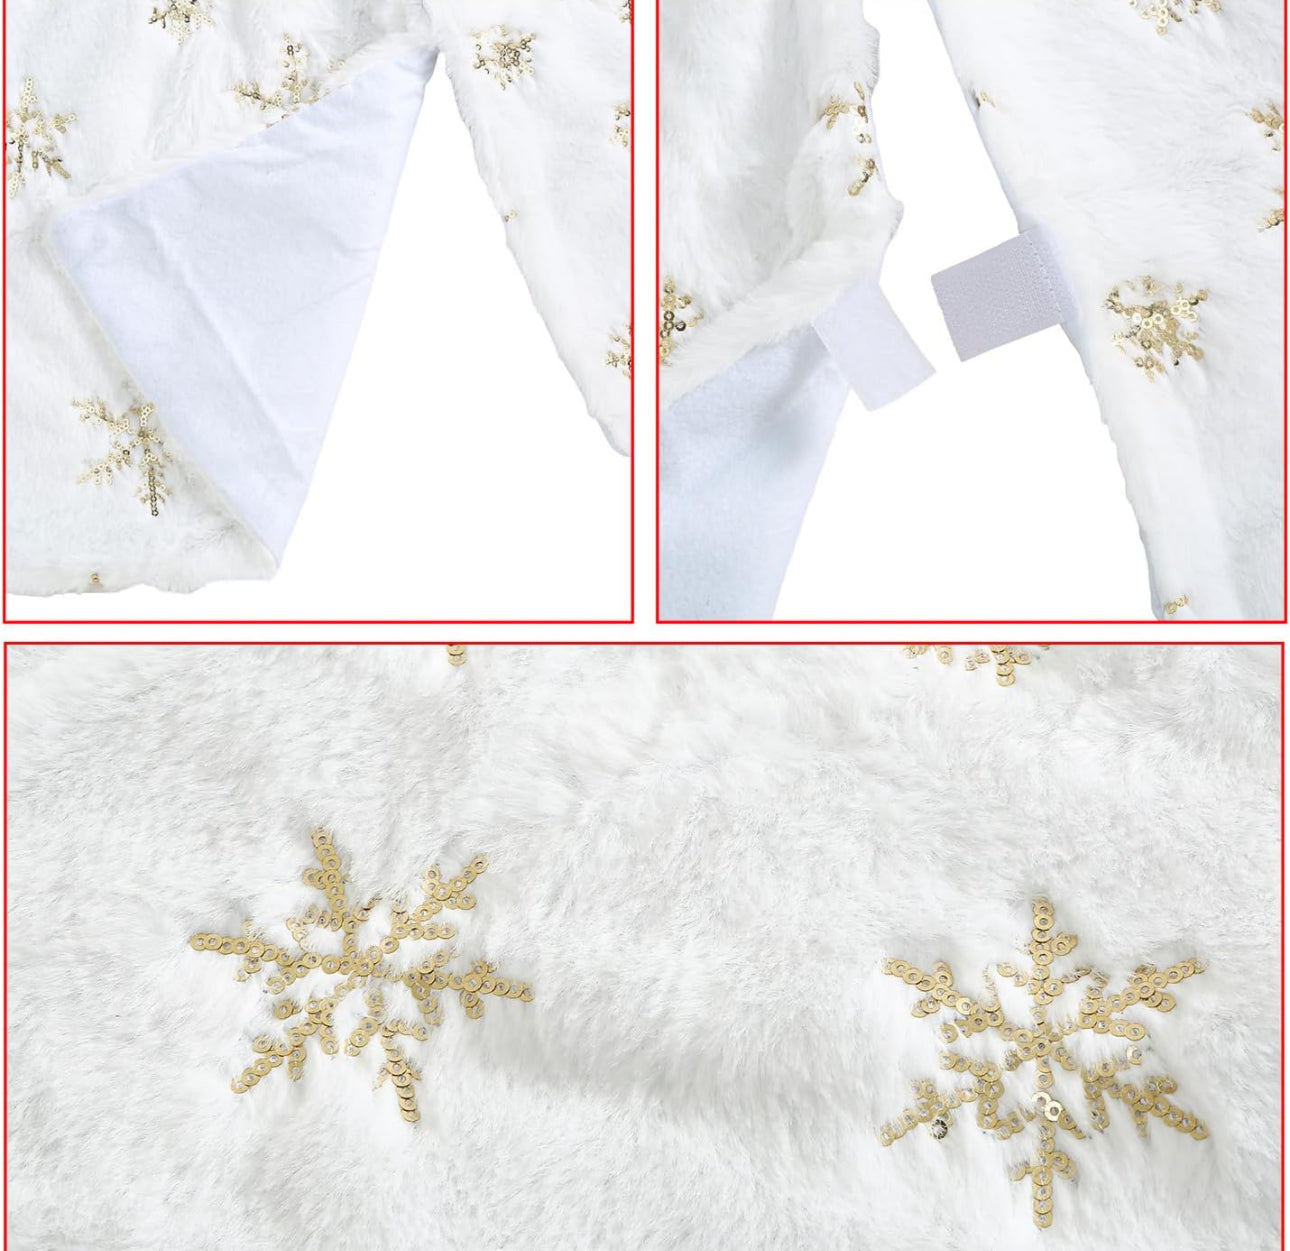 Masnest 48 Inch Faux Fur Christmas Tree Skirt,White Plush Golden Sequin Snowflake Xmas Christmas Tree Skirt (Golden, 48 inch)